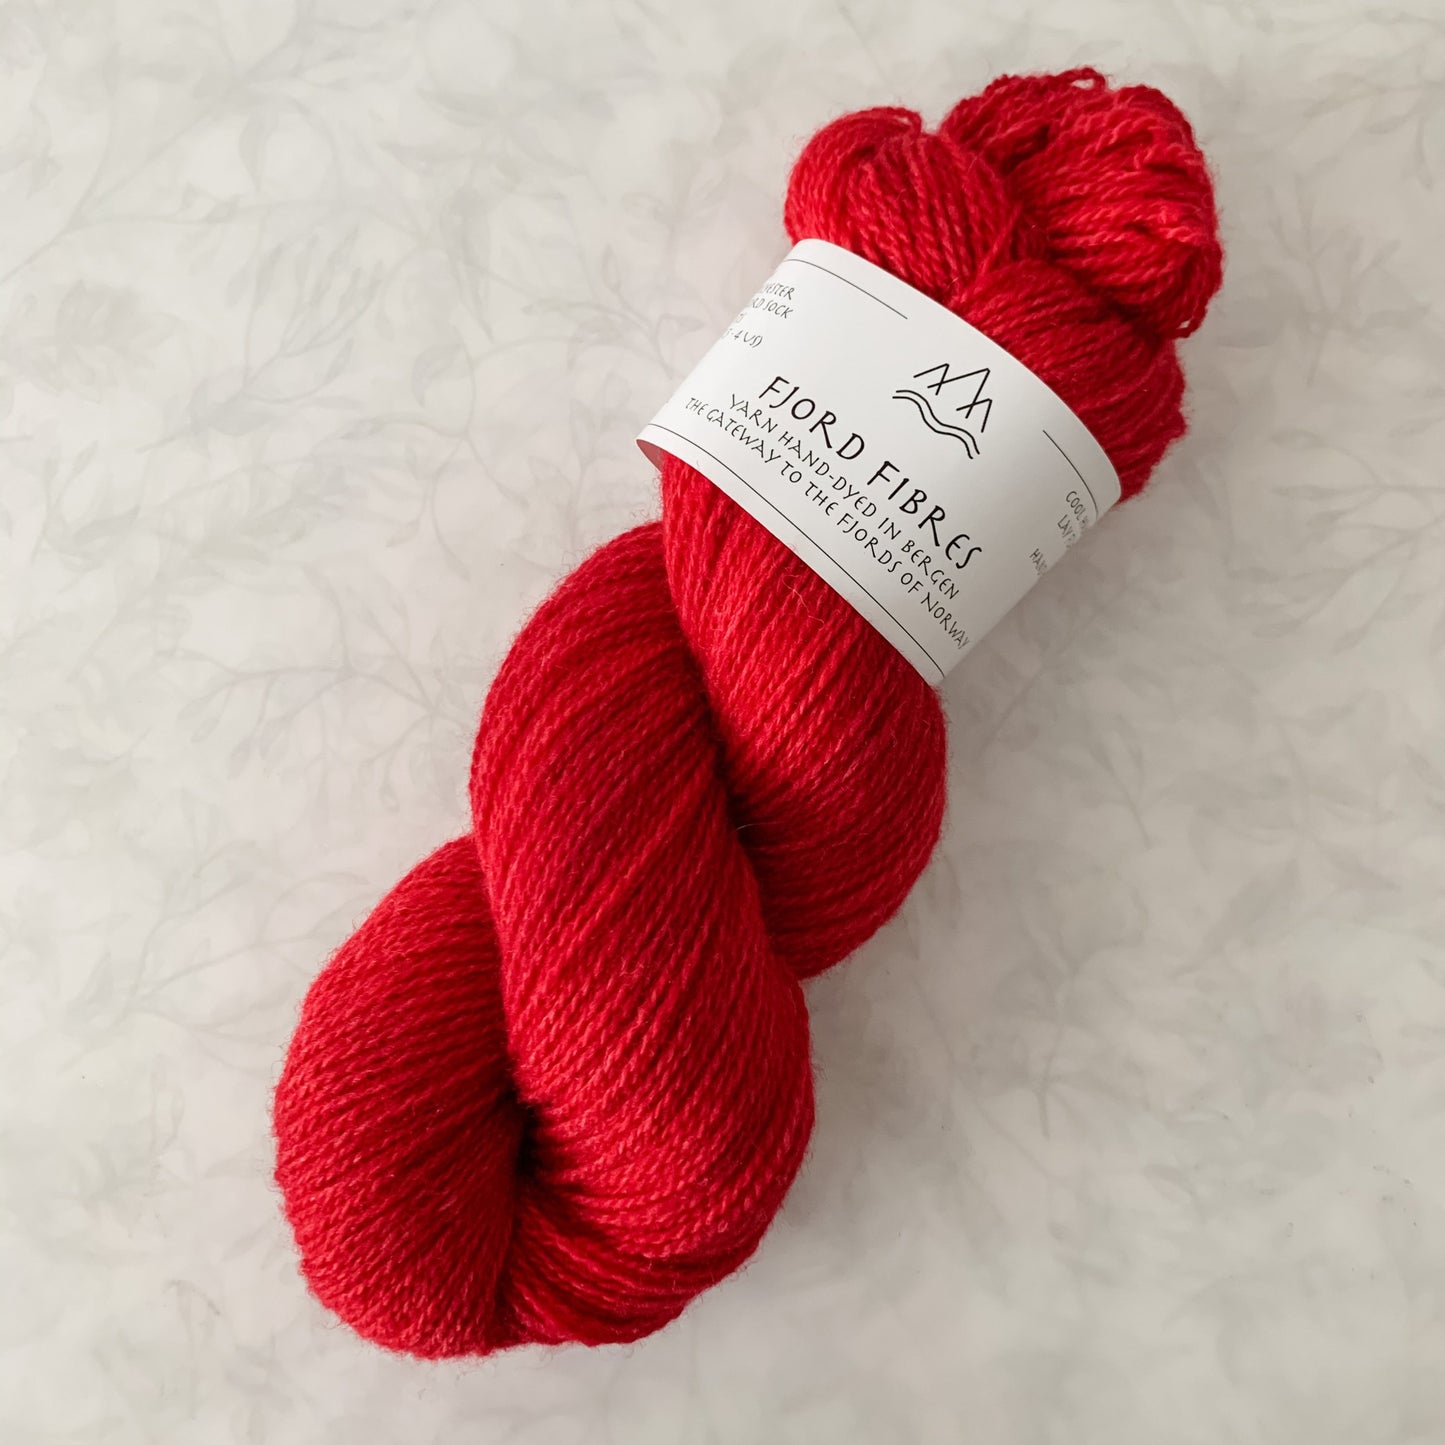 Loyal - Trollfjord sock - Tonal Yarn - Hand dyed yarn